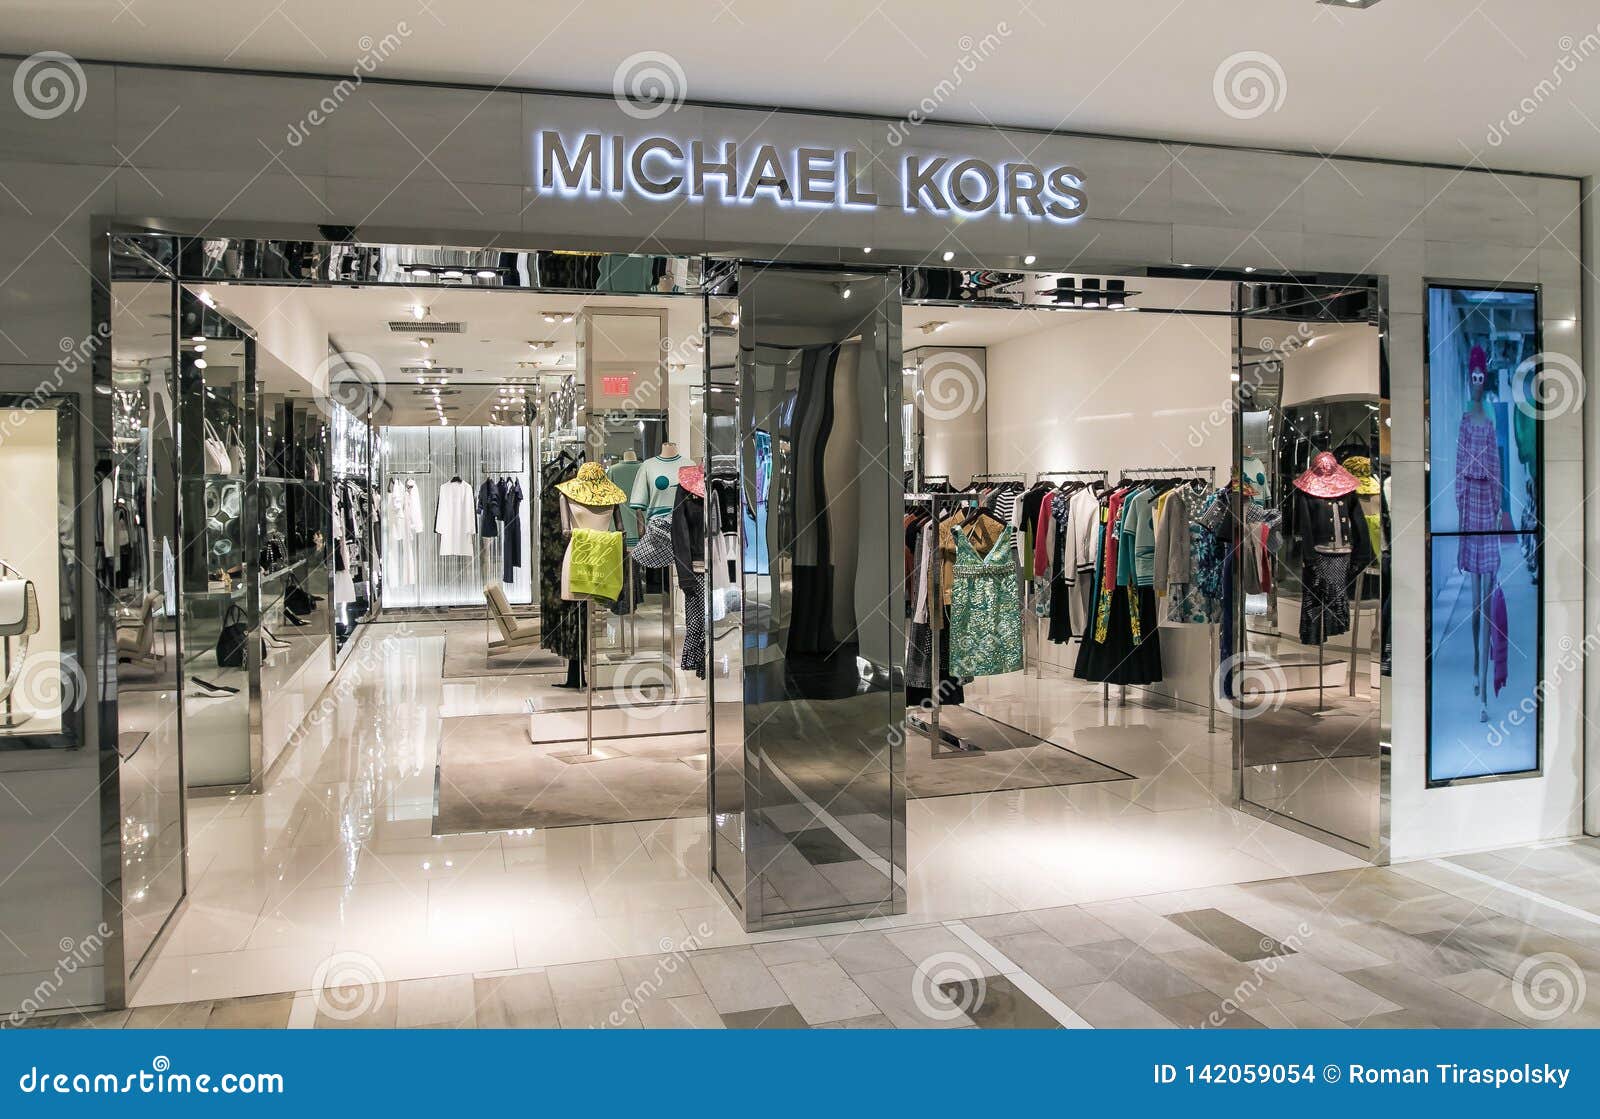 michael kors clothing store